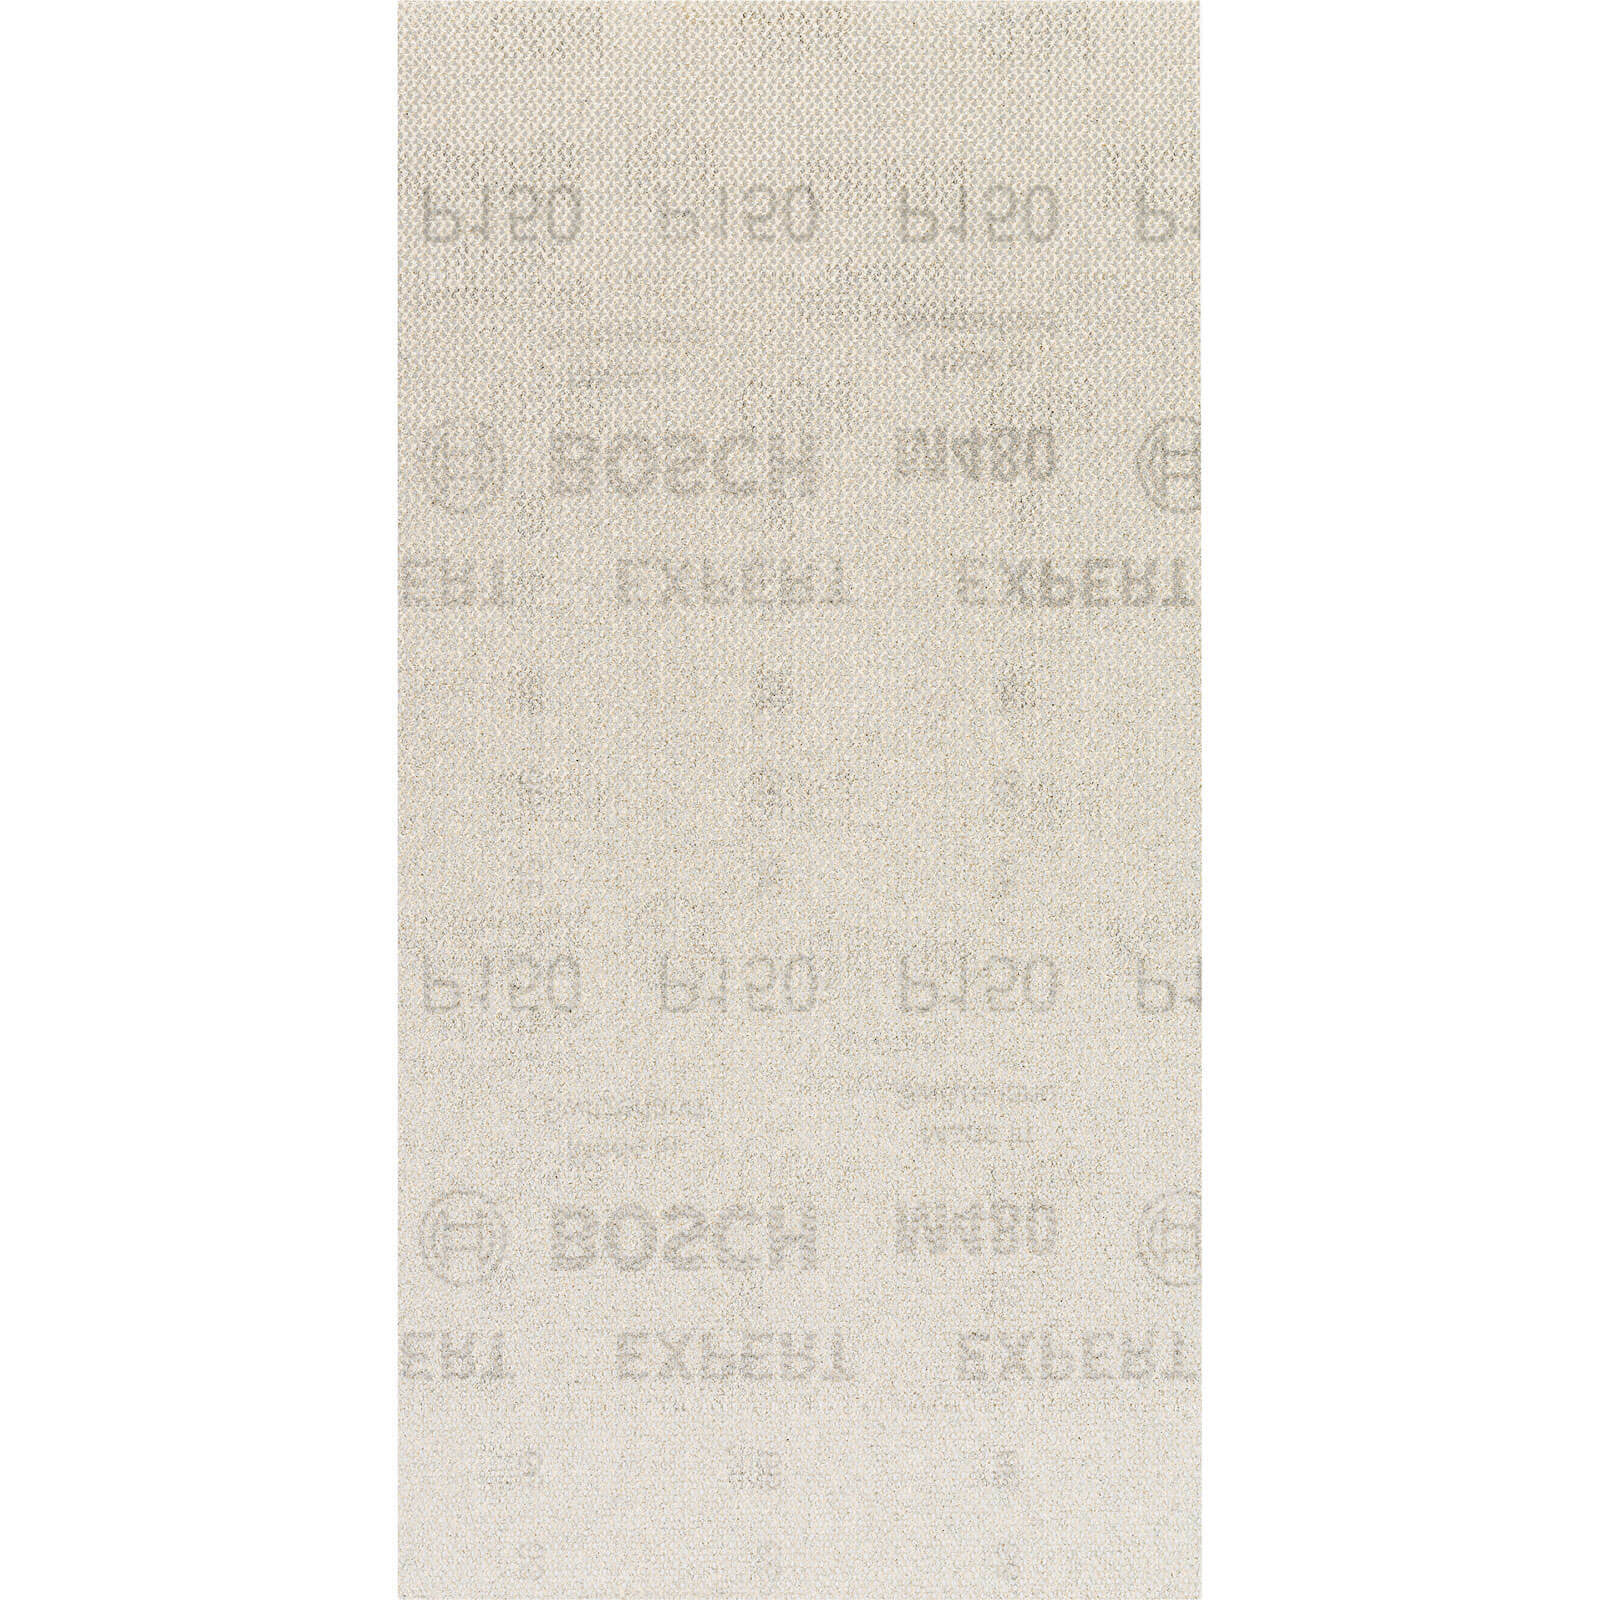 Image of Bosch Expert M480 115mm x 230mm Net Abrasive Sanding Sheets 115mm x 230mm 150g Pack of 10